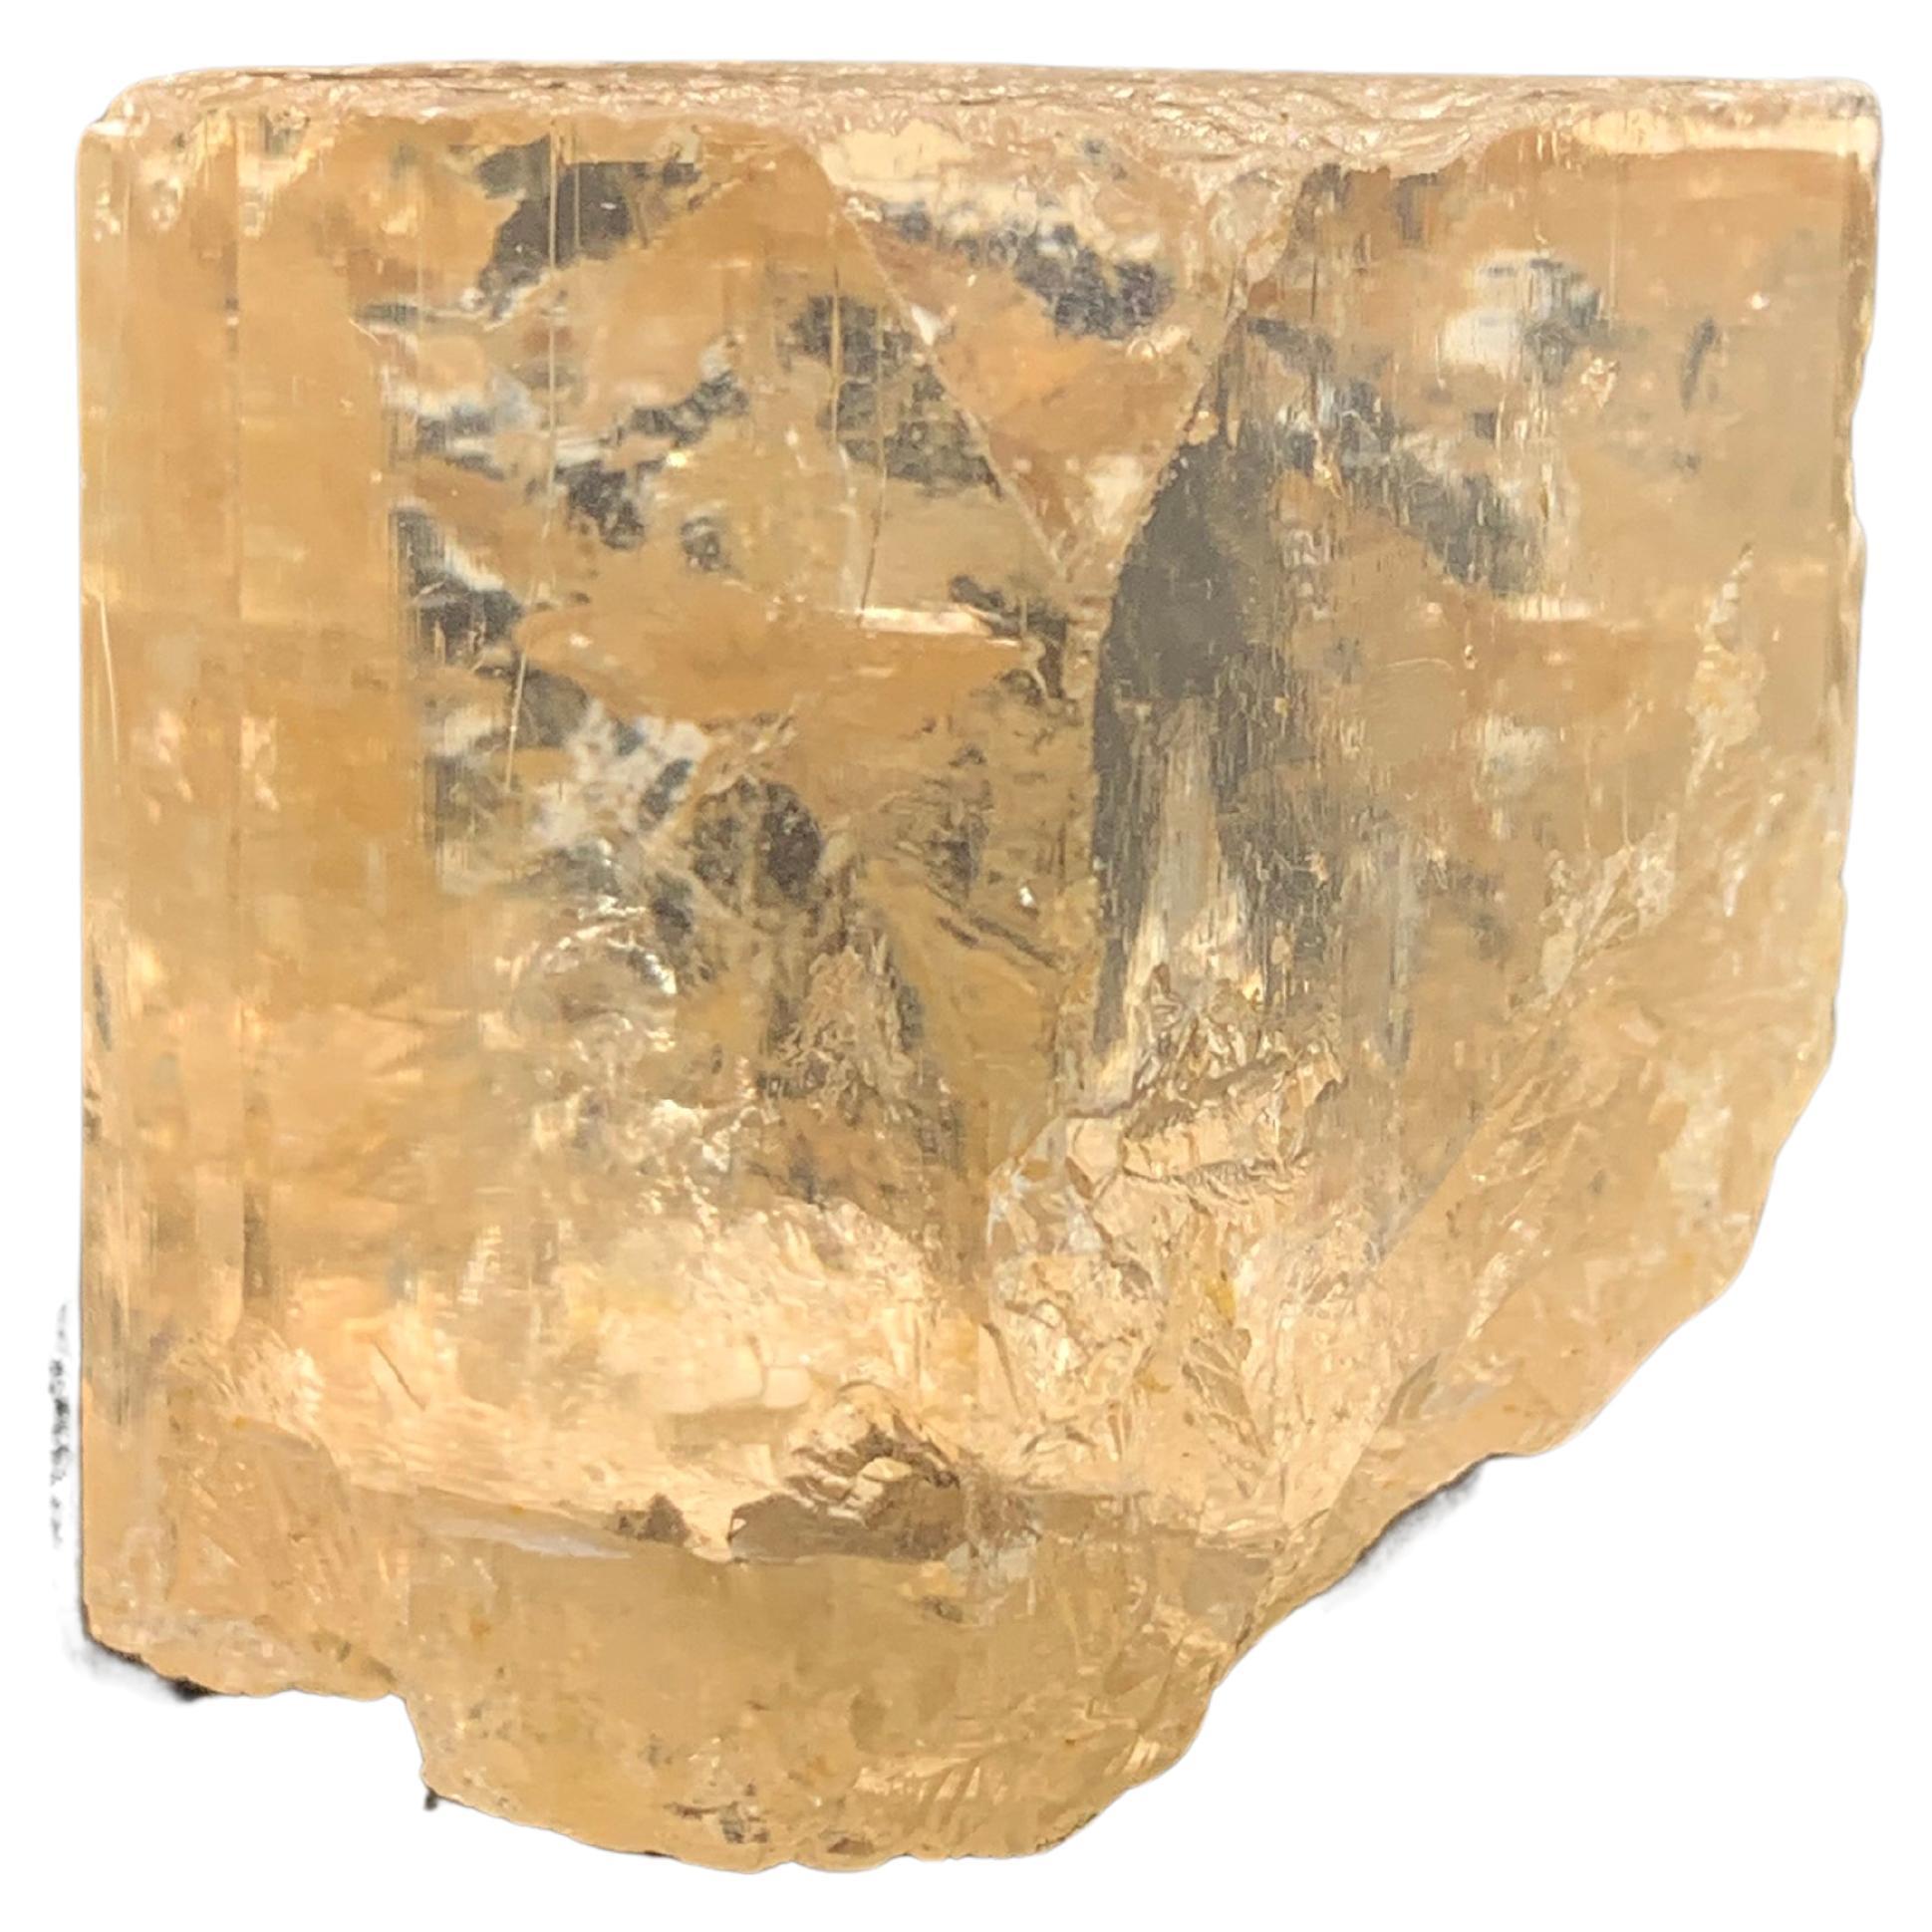 148.06 Gram Lustrous Topaz Crystal From Skardu, Pakistan 